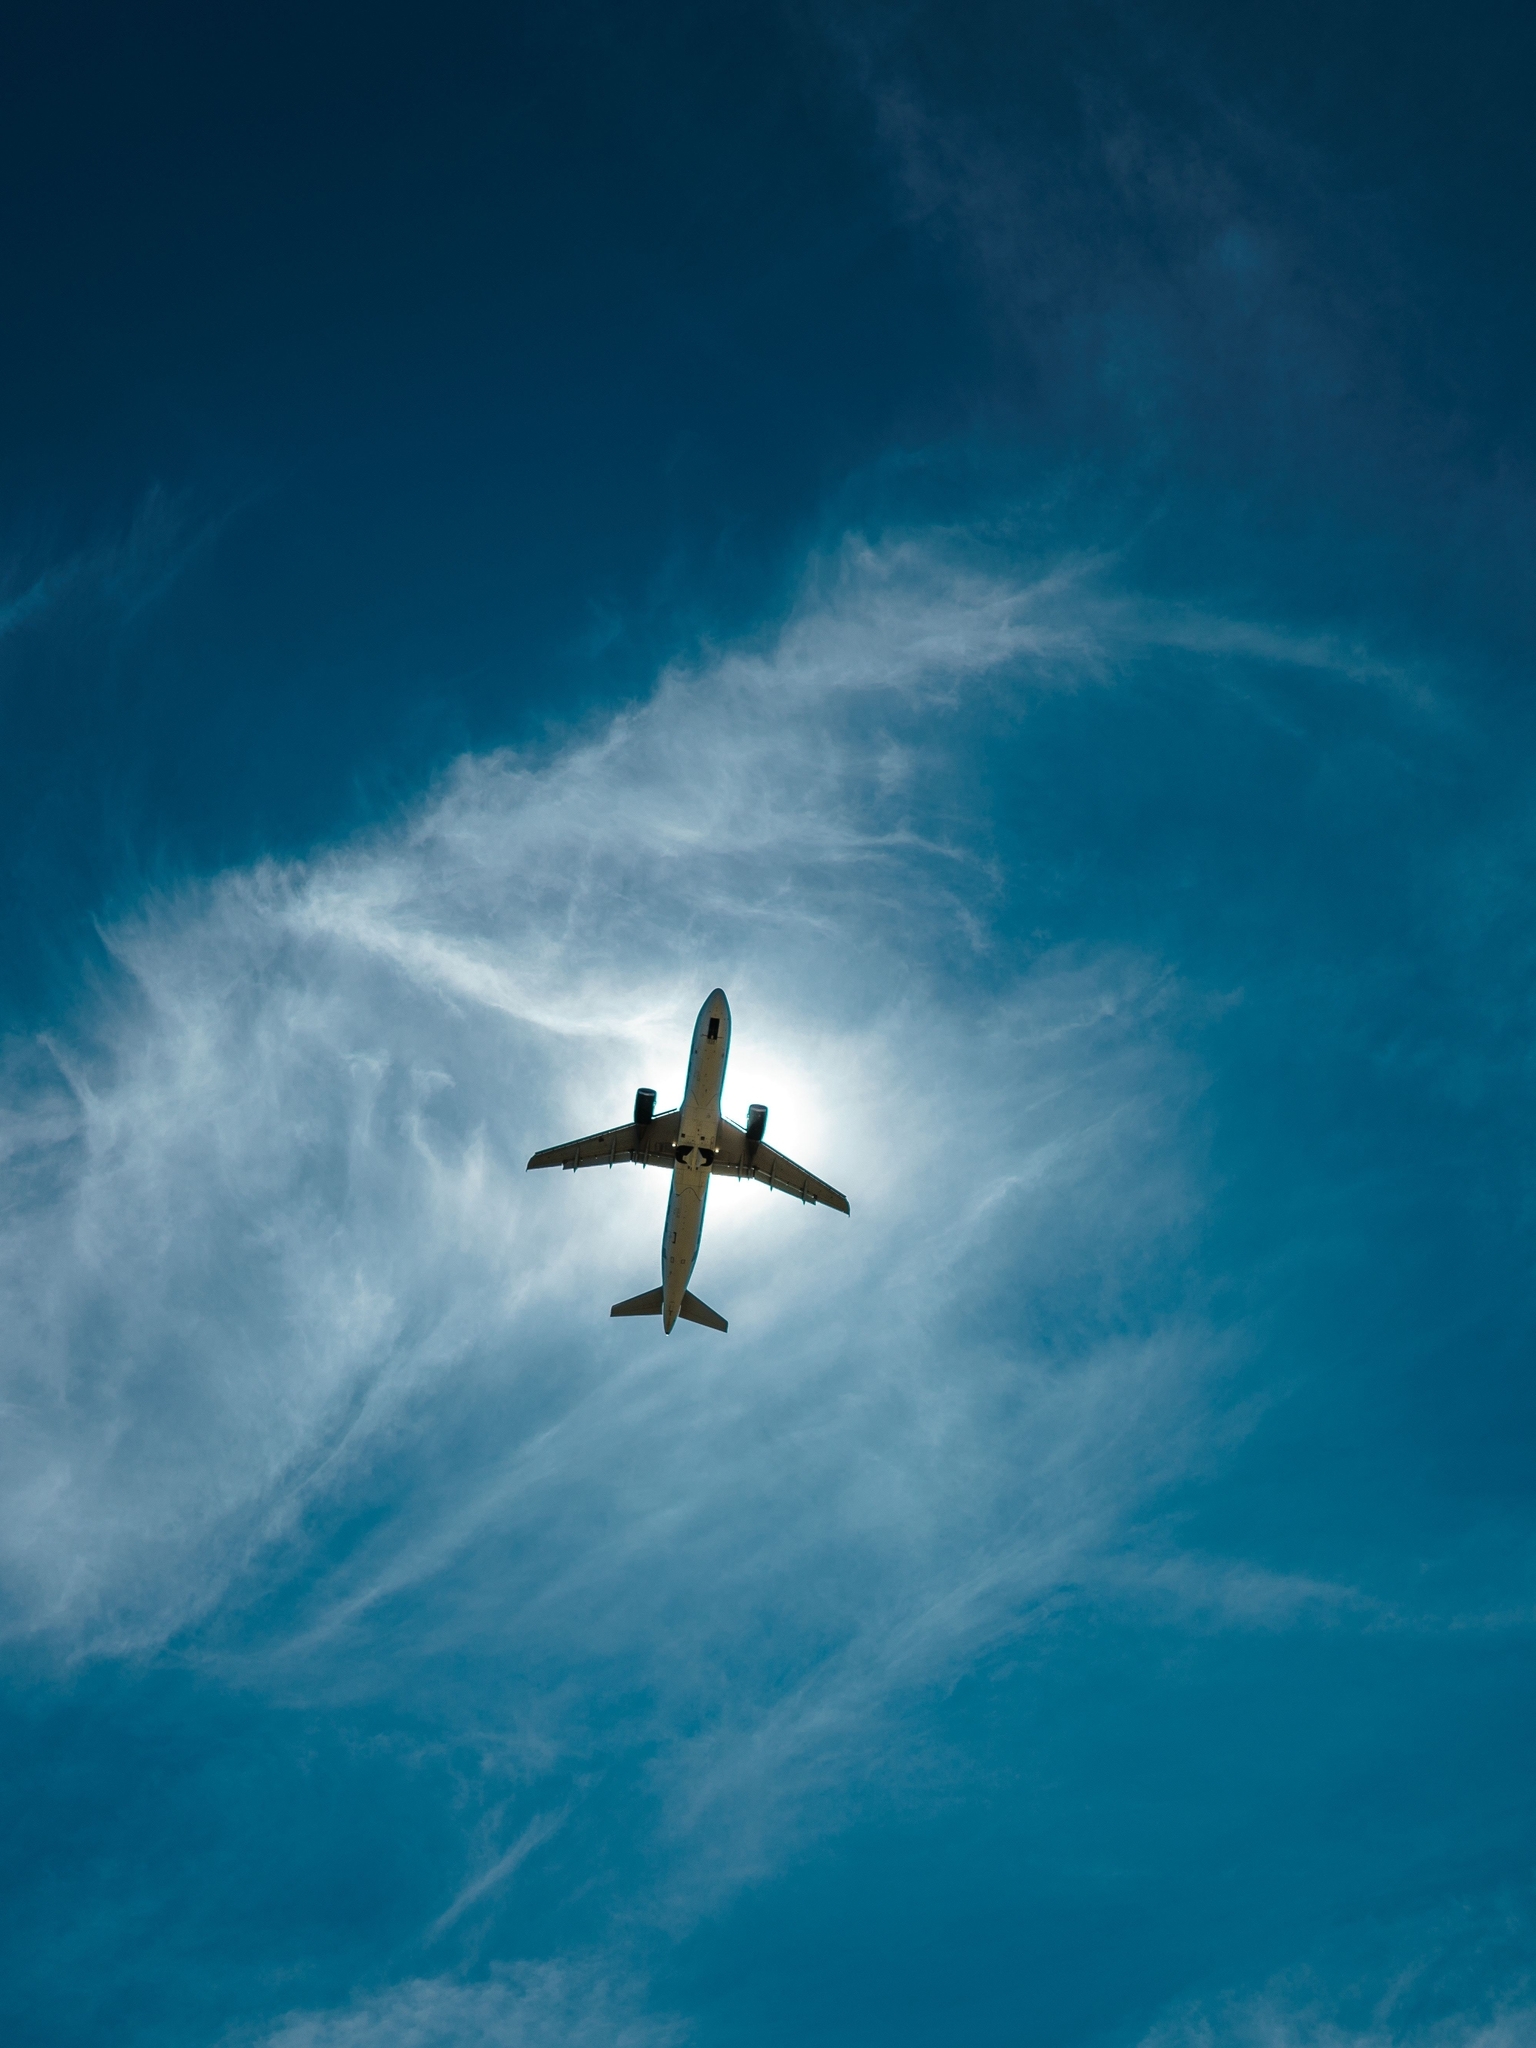 Image: Plane, flight, flying, high, skies, sky